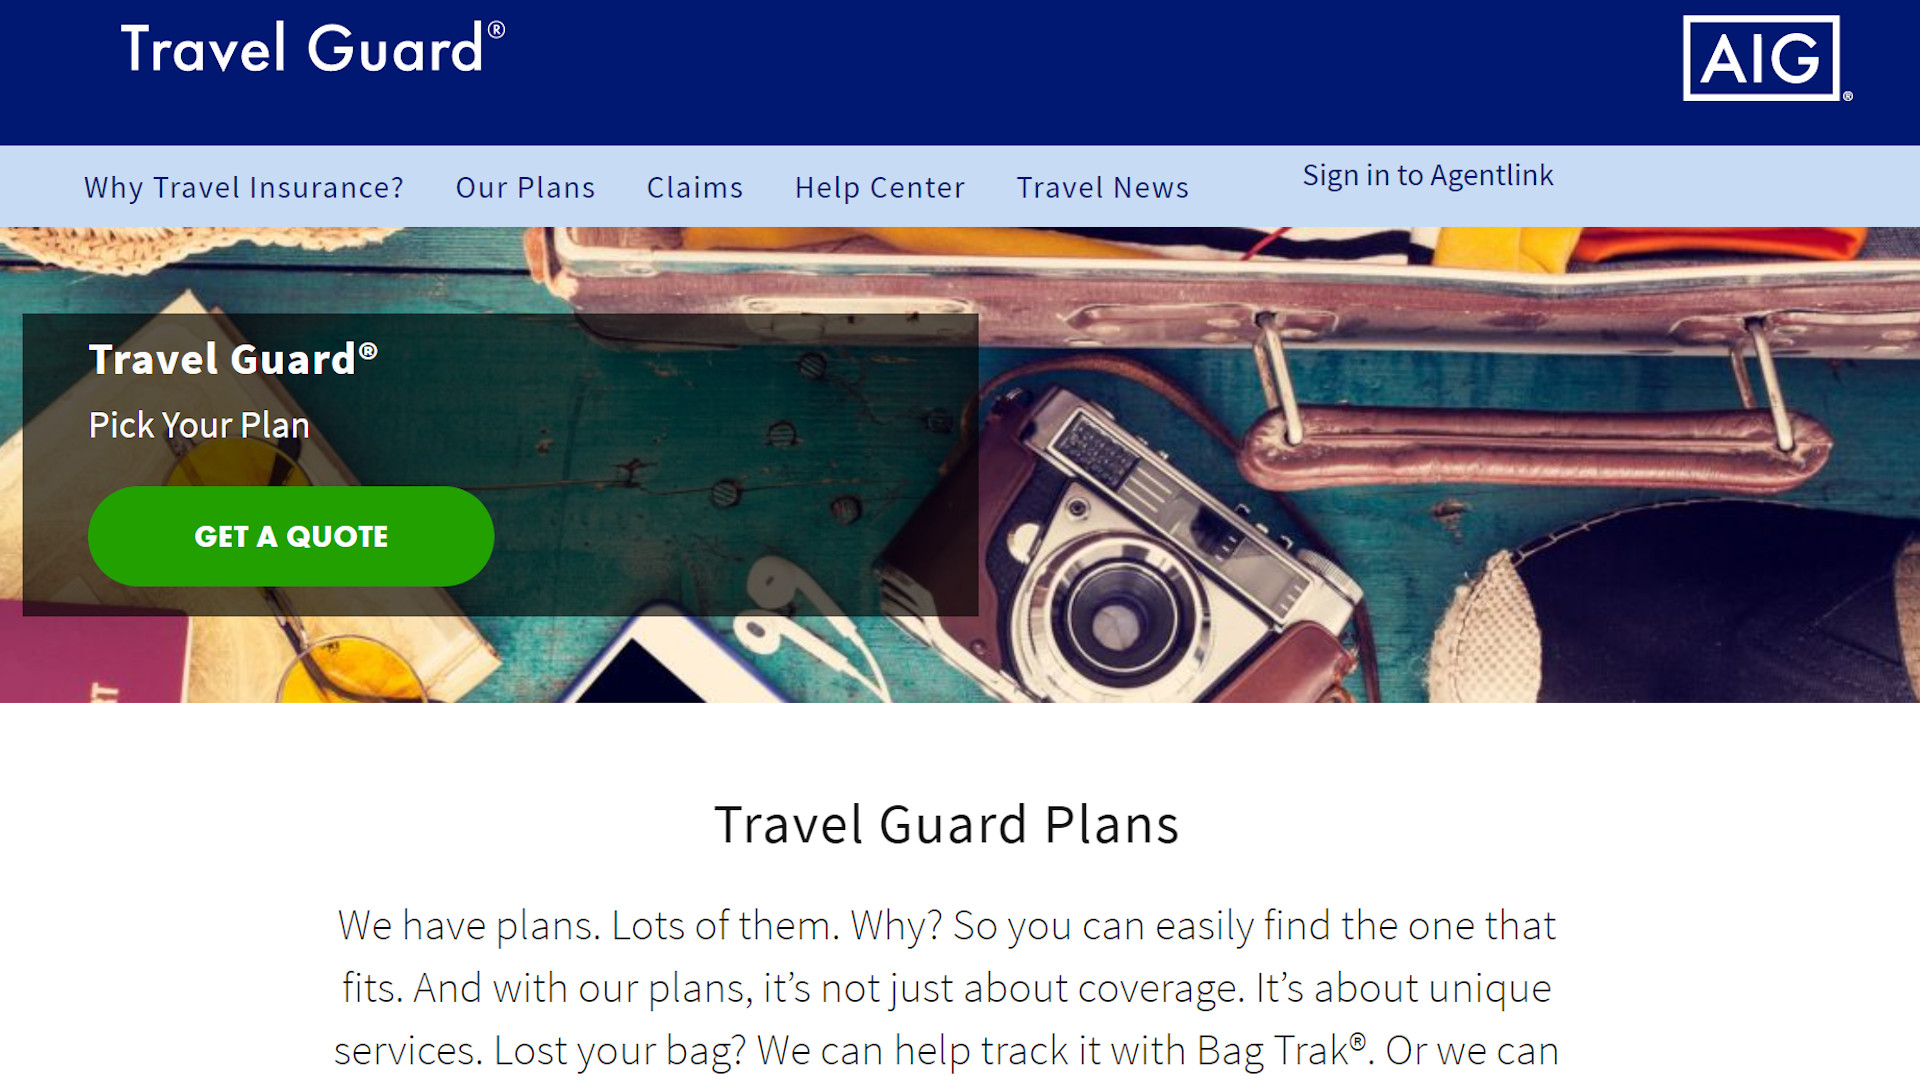 aig travel guard essential reviews